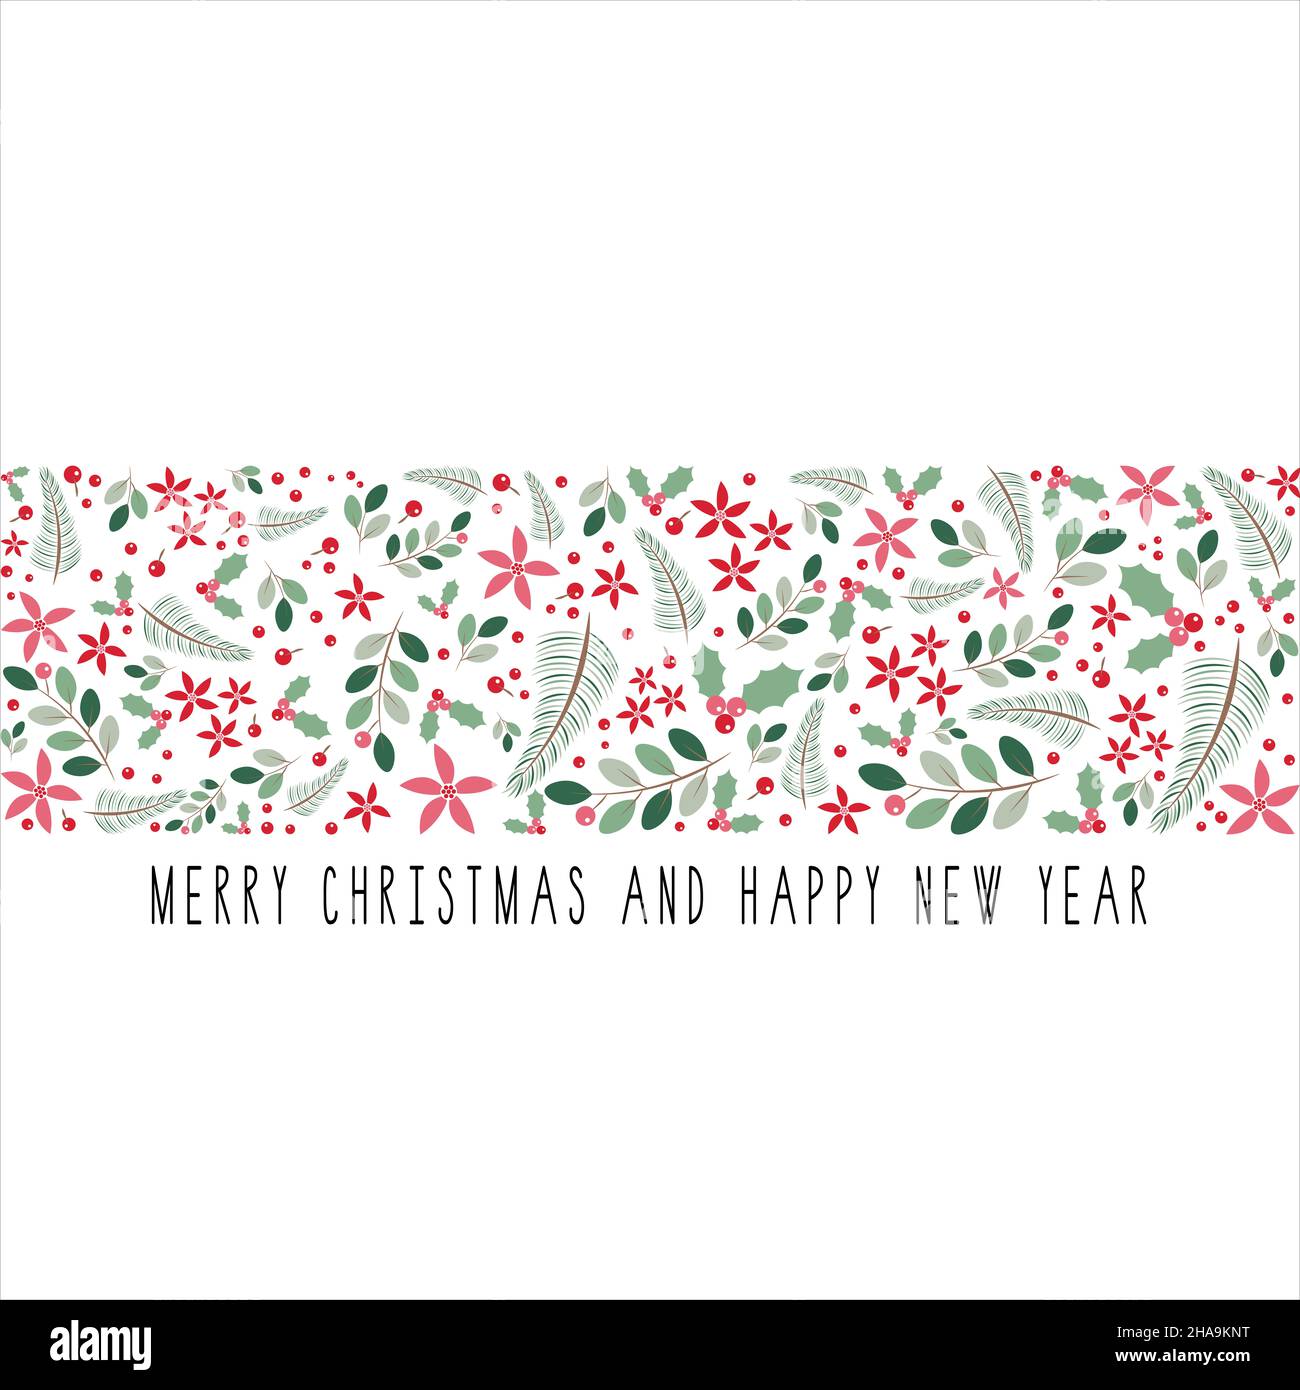 Greeting card with Christmas decoration illustration isolated on white background Stock Photo